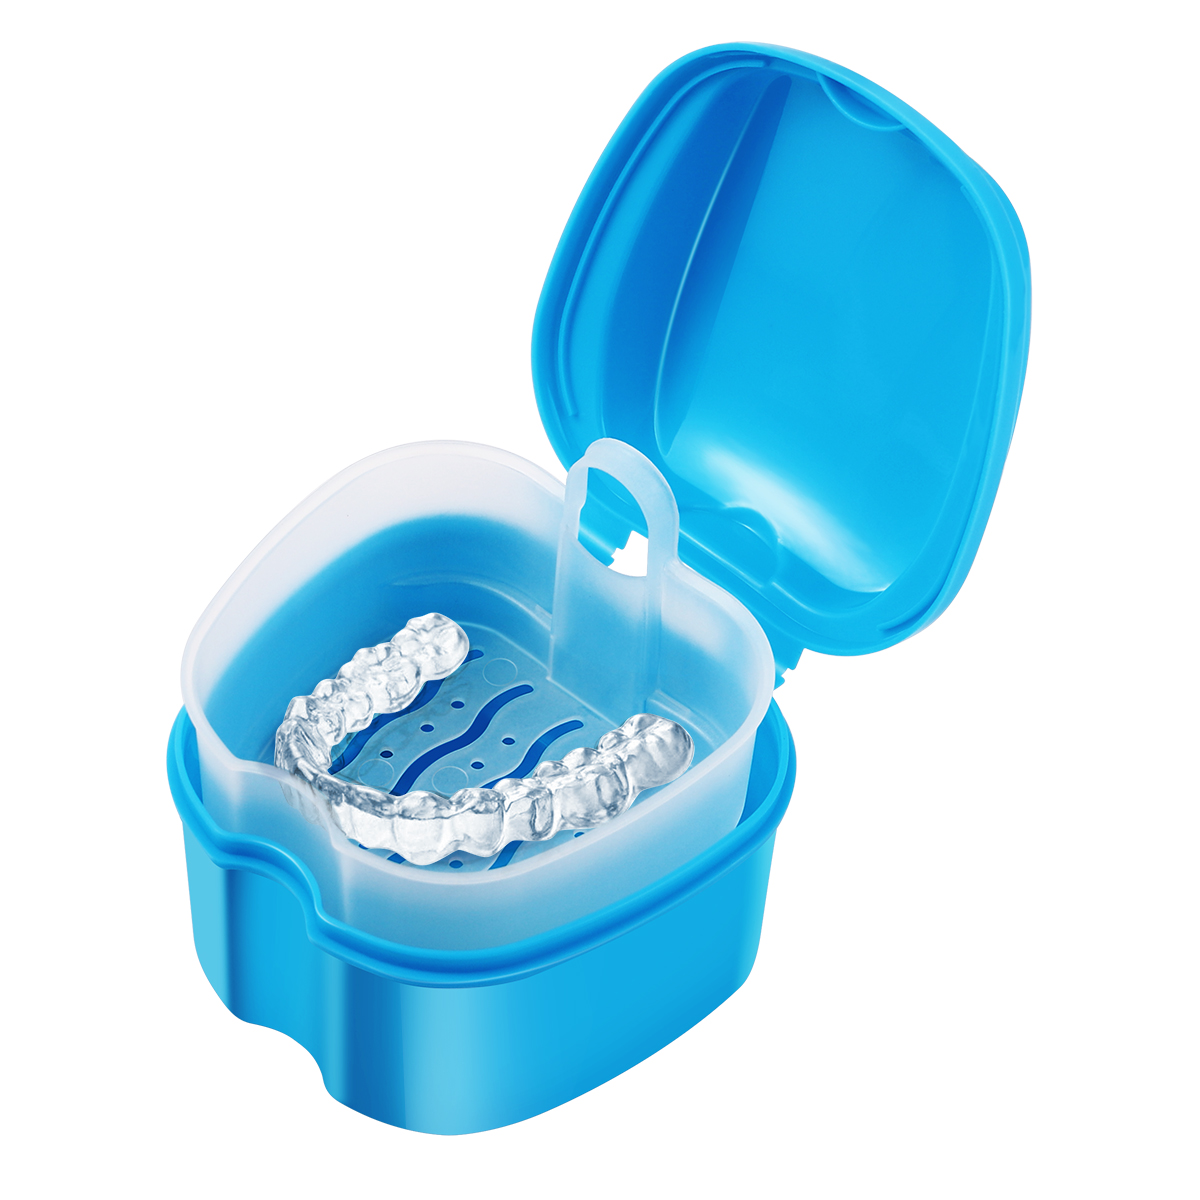 Denture Case Denture Bath Box Case Dental Orthodontic Retainer False Teeth Storage Case Box with Strainer denture cups for soaking dentures